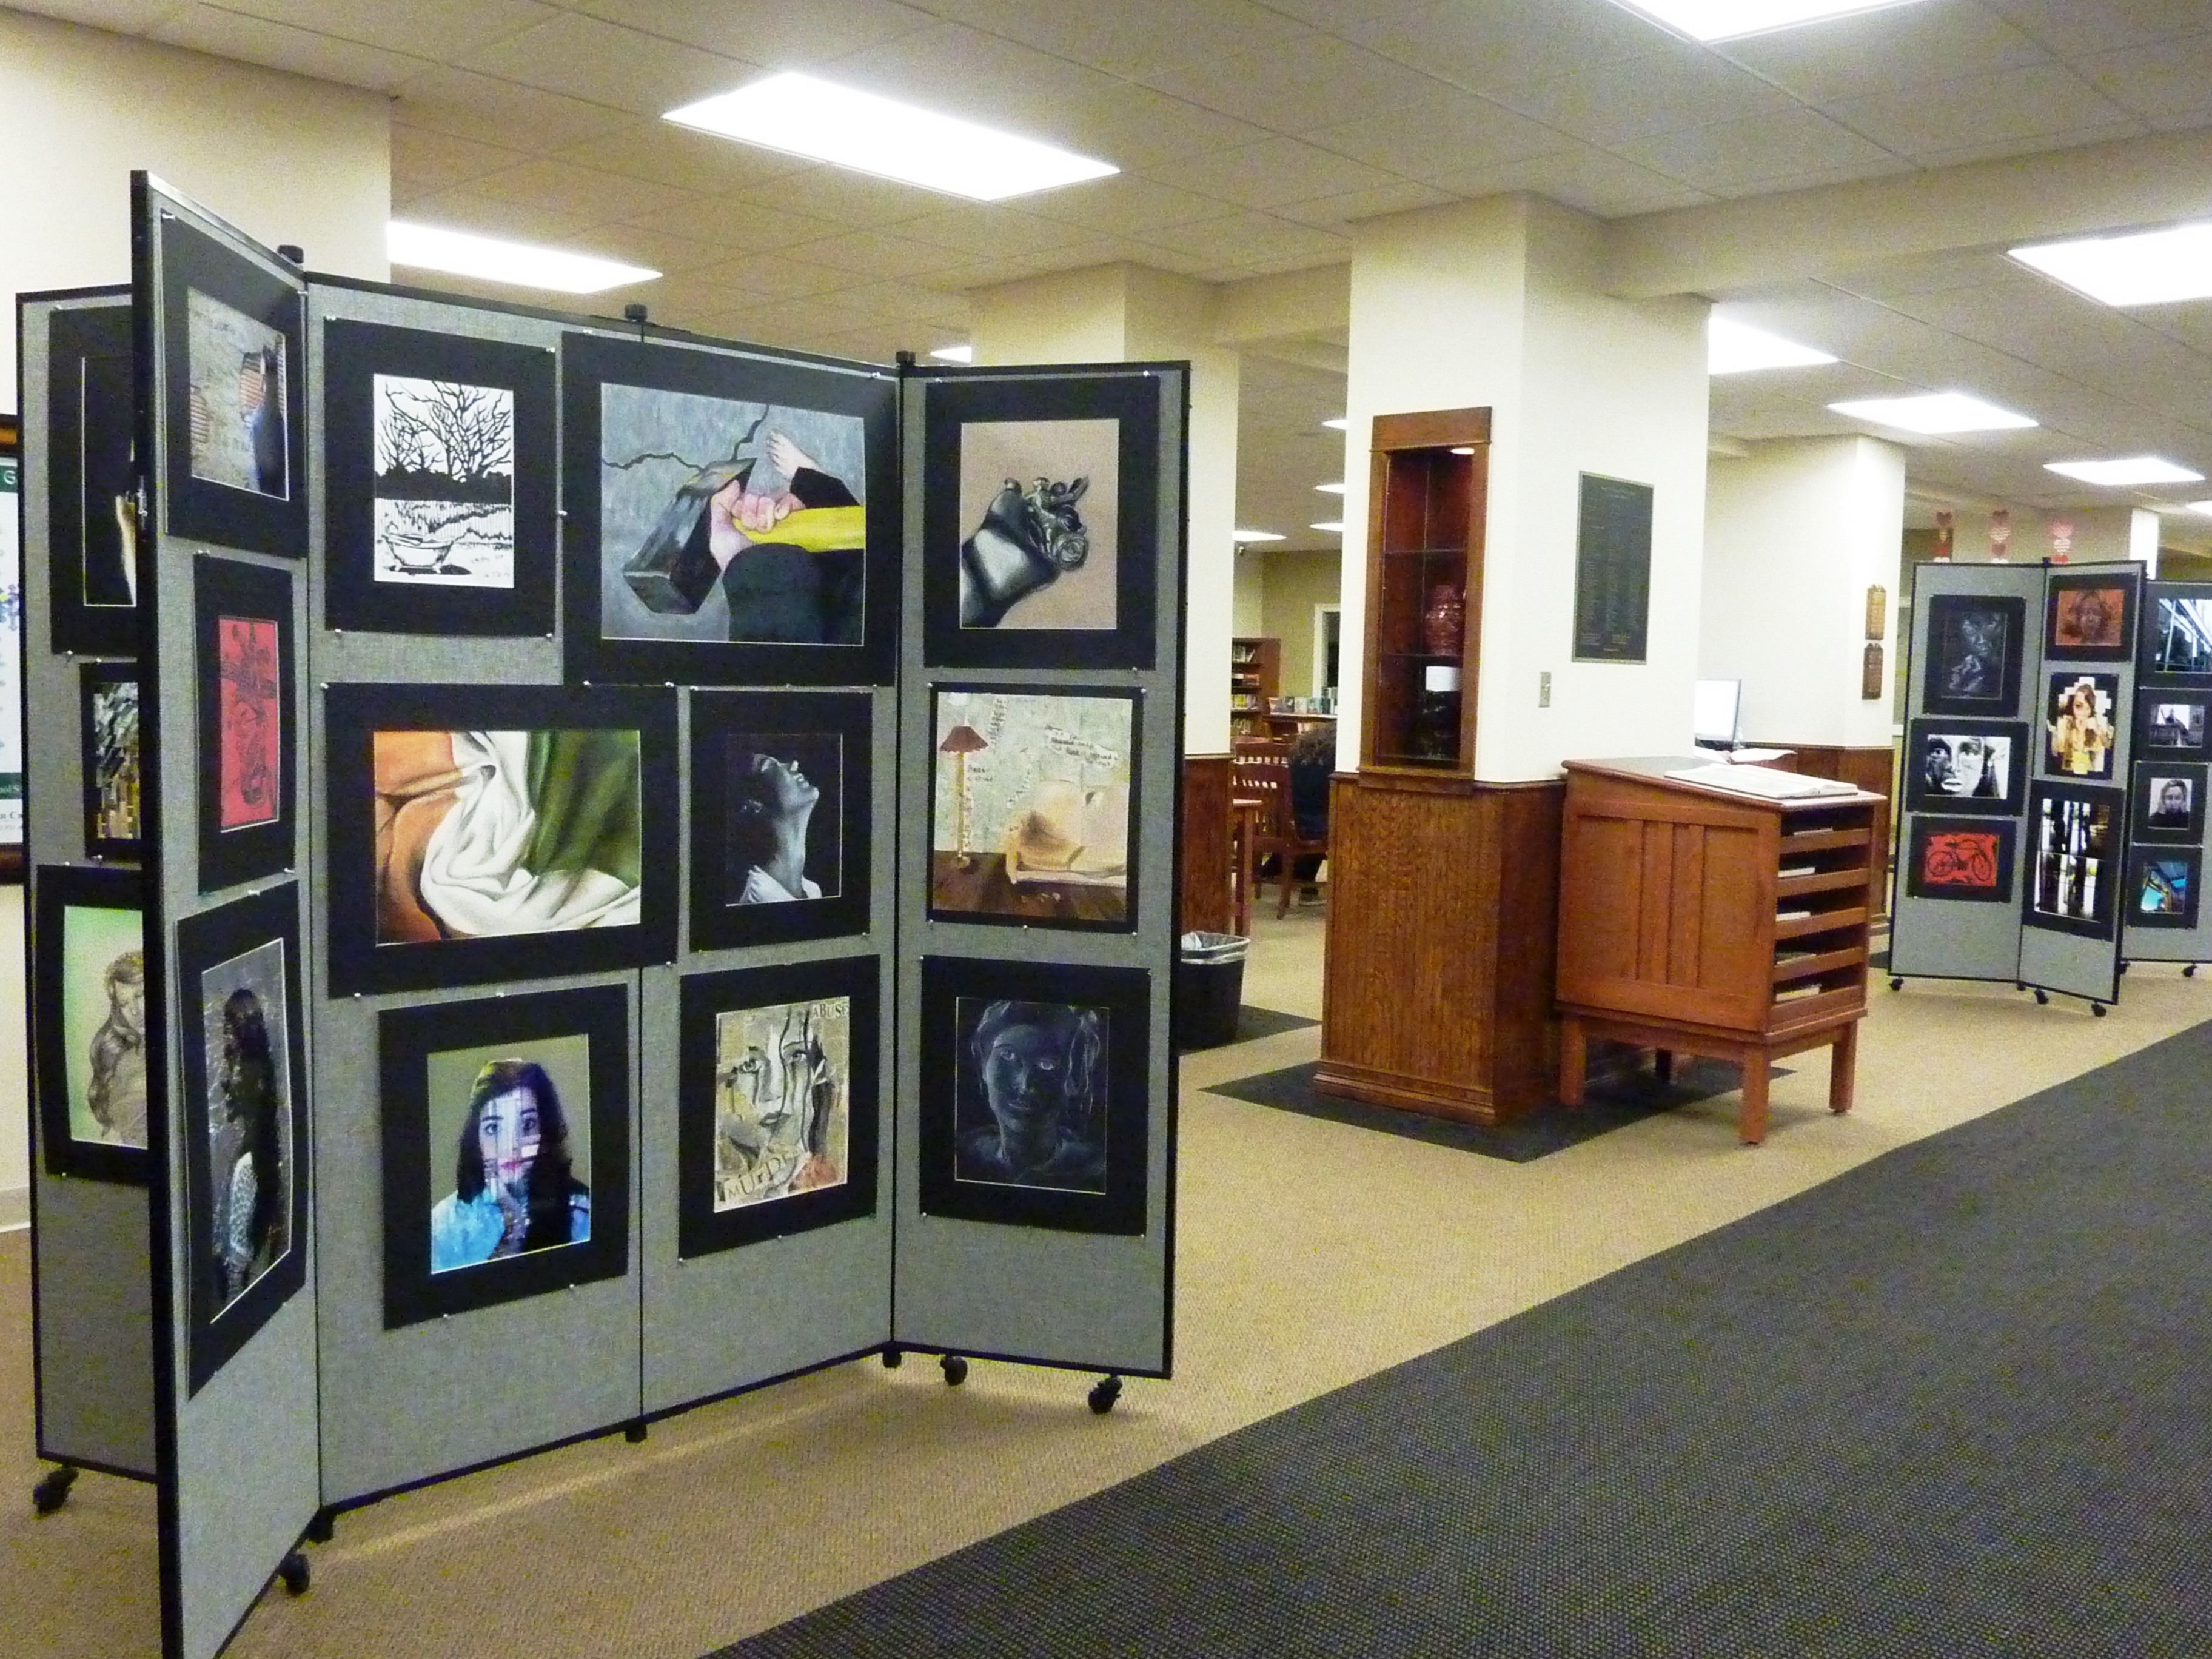 Student Art Festival Display, Screenflex Portable Room Dividers